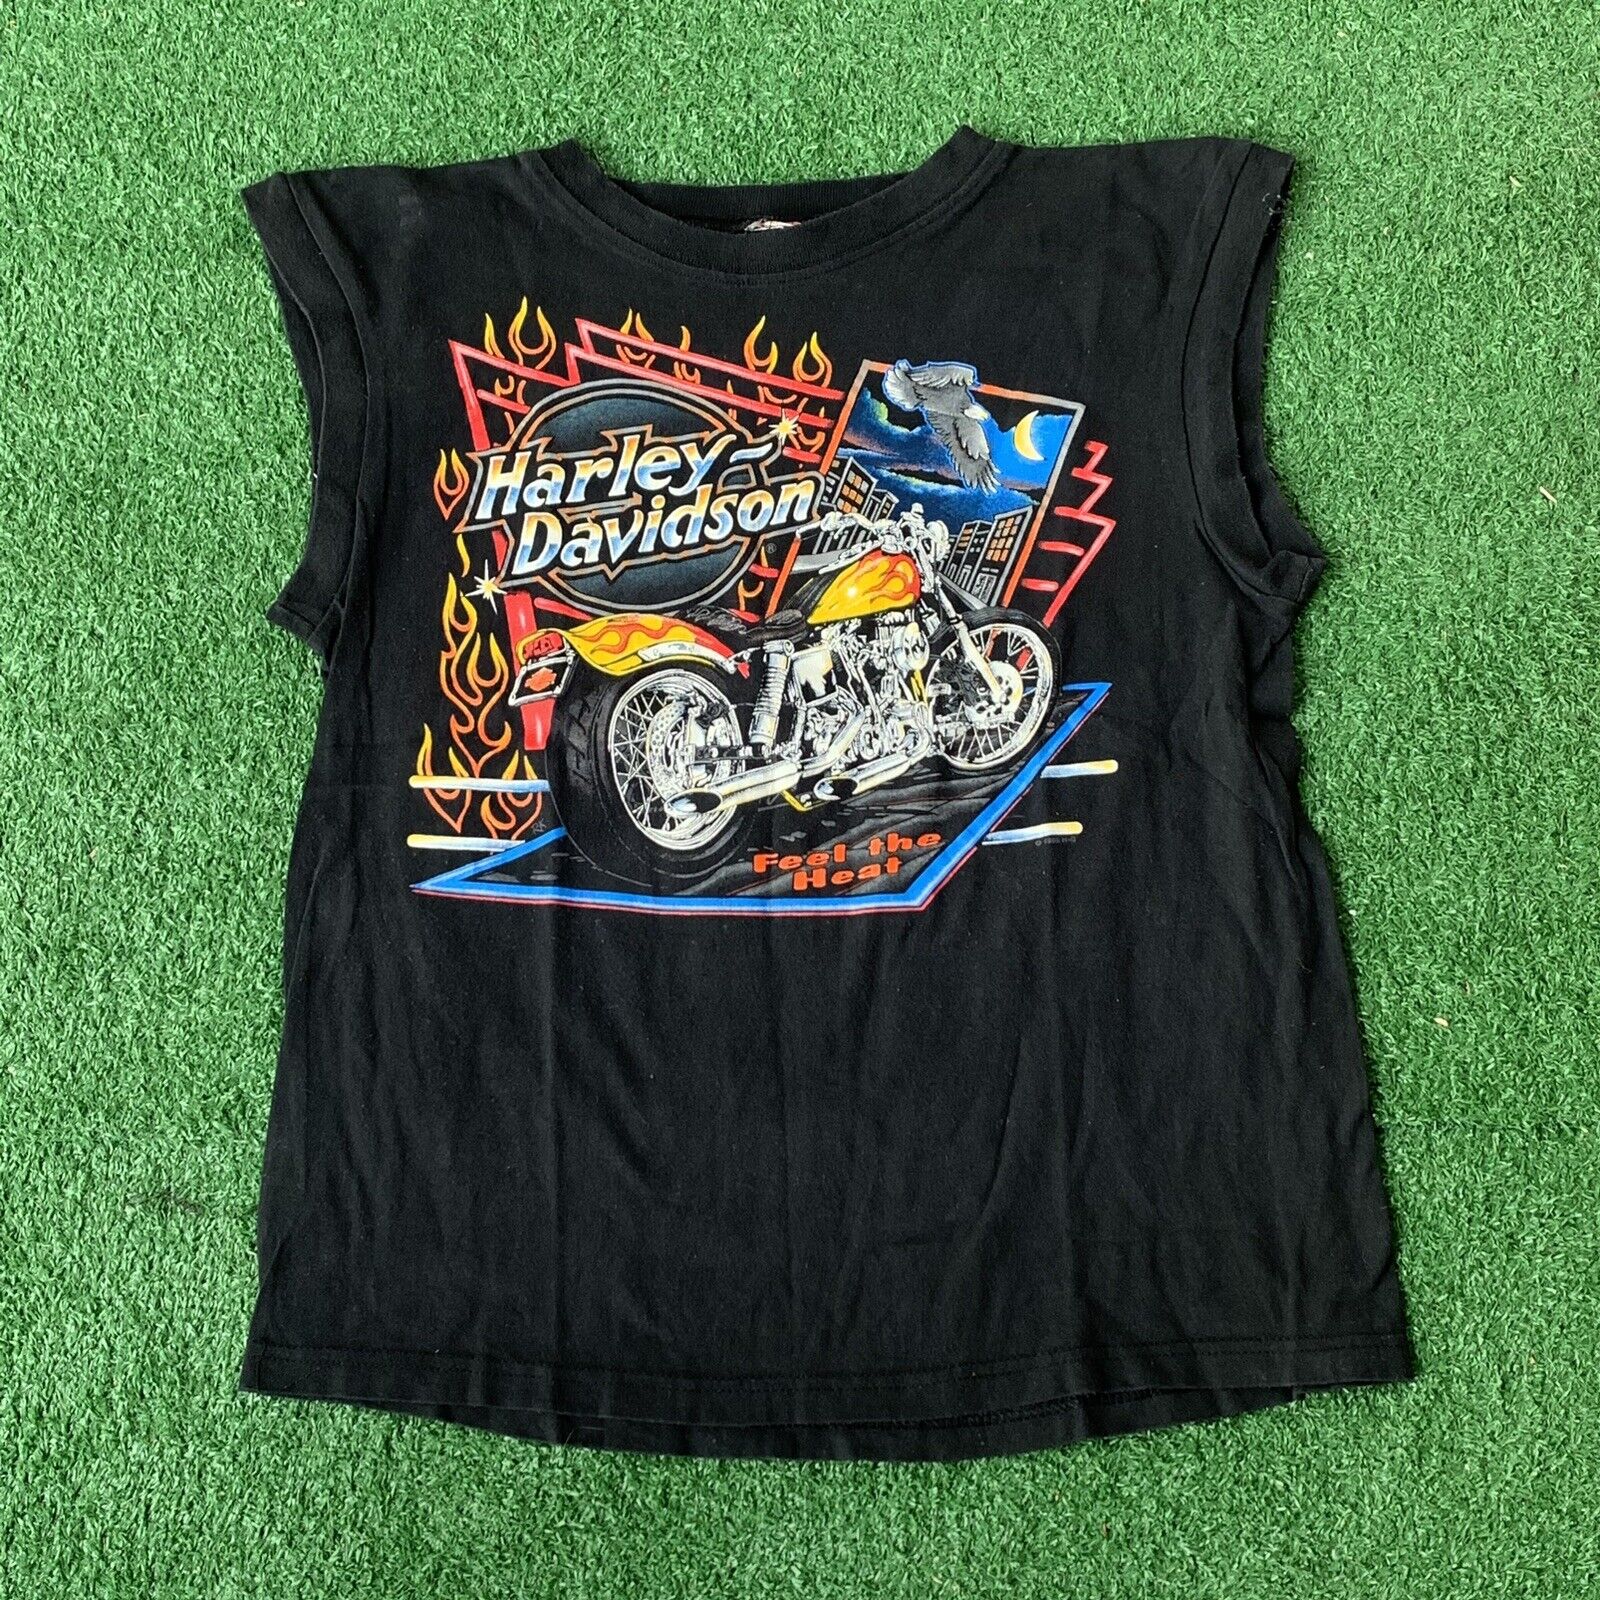 Sz L- Vintage 1995 Harley Davidson Central Texas sleeveless shirt men’s black